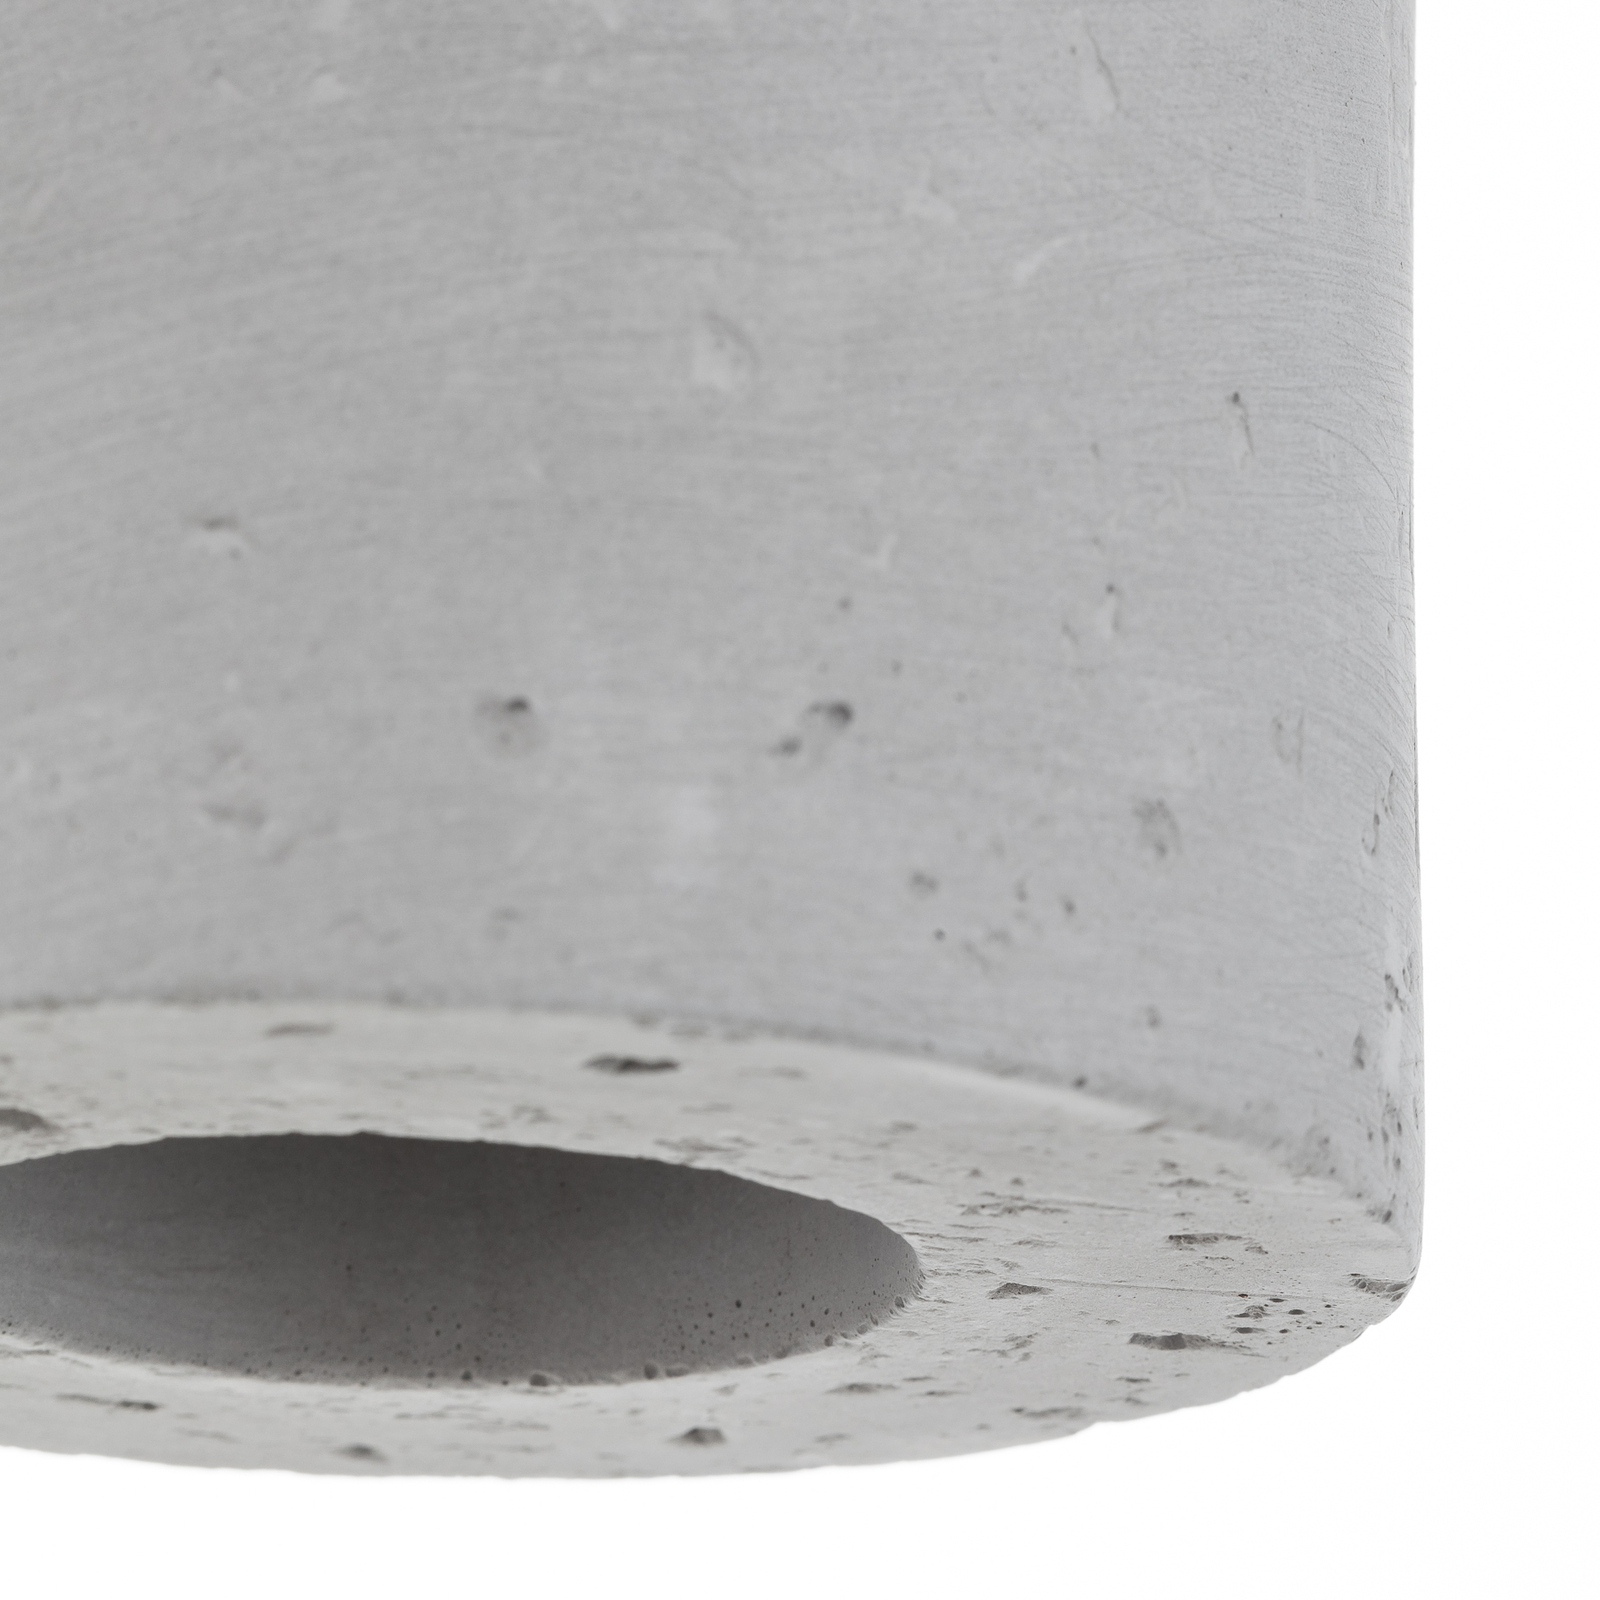 Plafonnier Ara en forme de cylindre en béton Ø 10cm